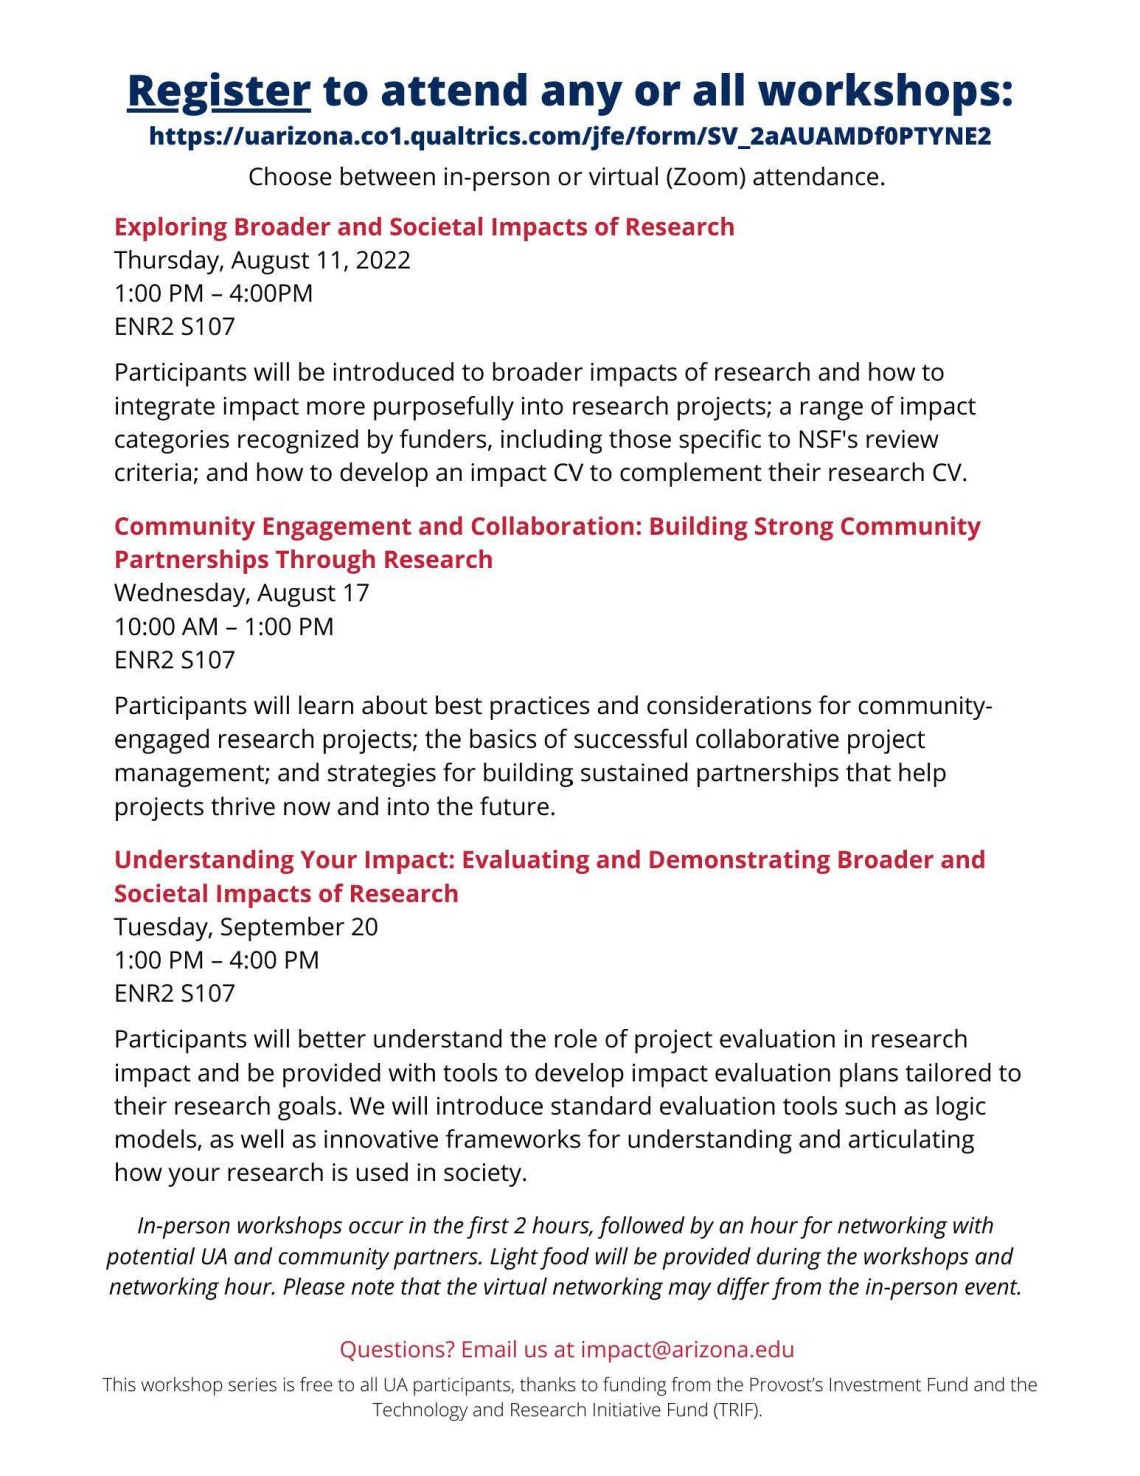 Building Societal Impact Skills info flyer 2 of 2